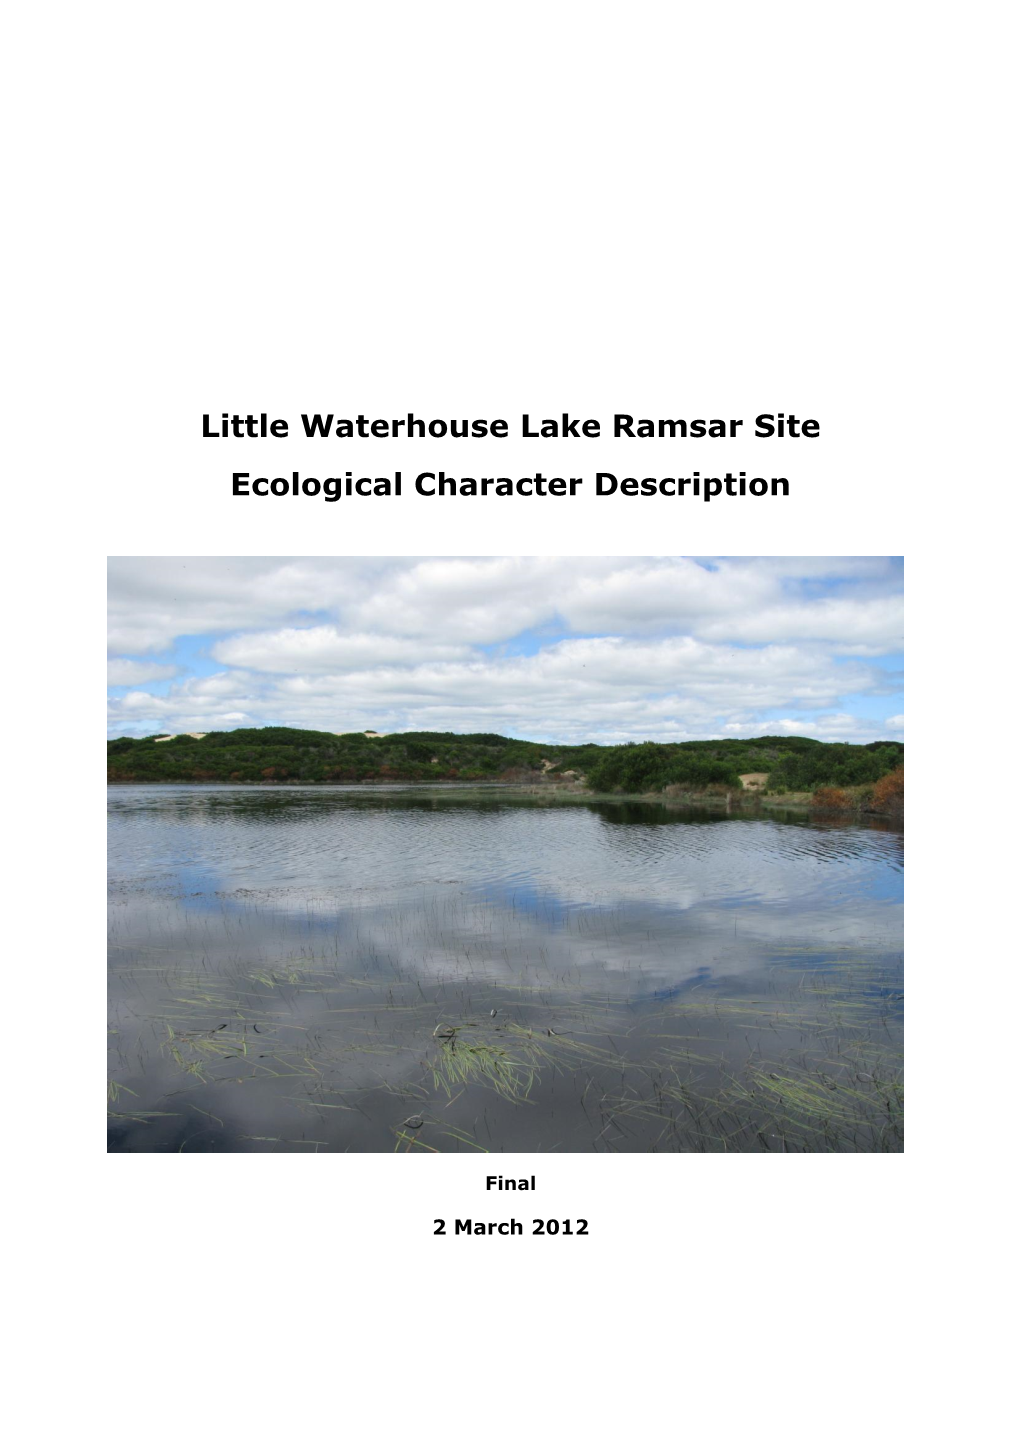 Little Waterhouse Lake Ramsar Site Ecological Character Description